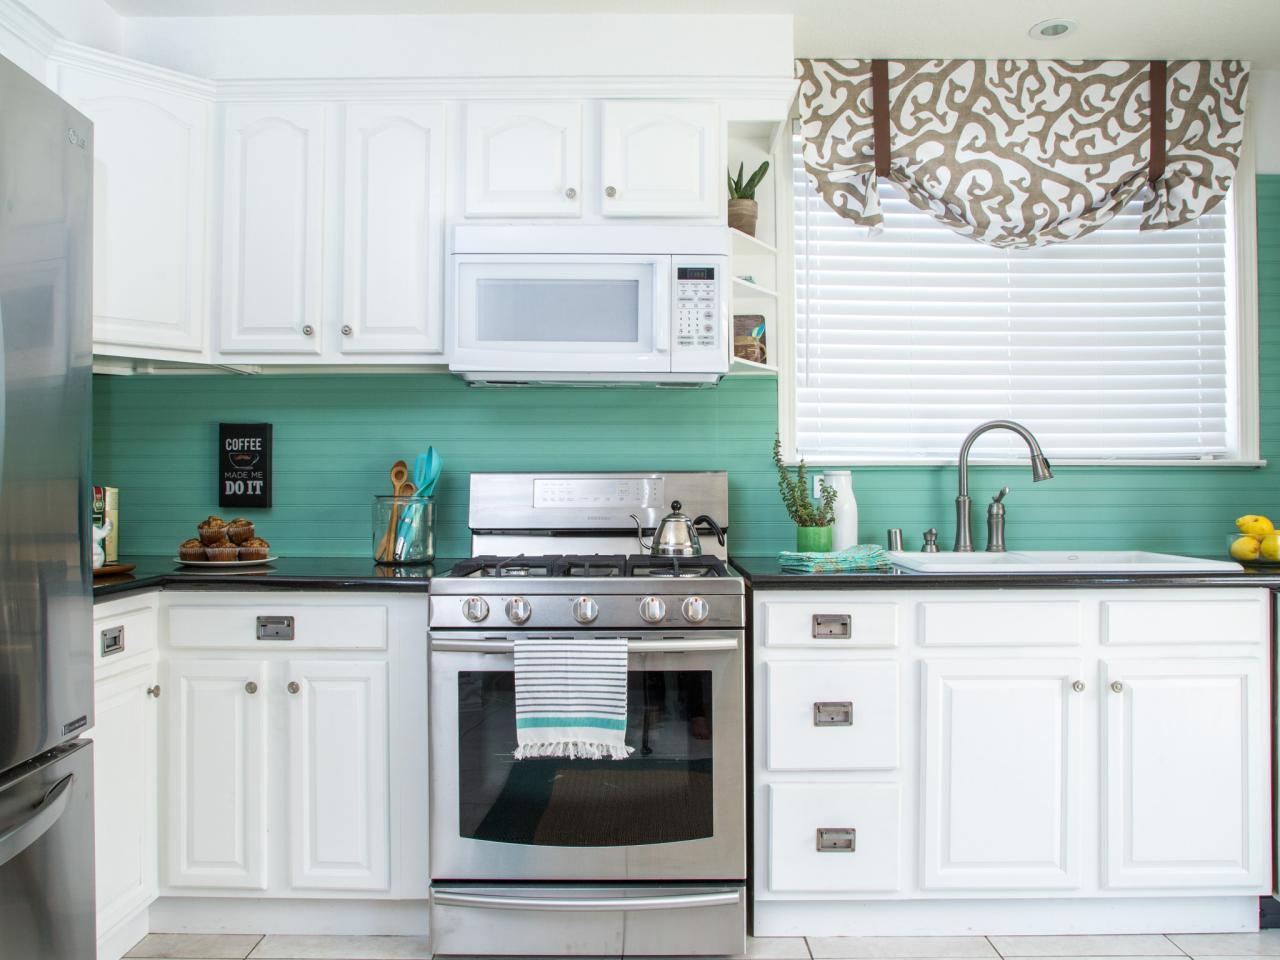 Kitchen Backsplash Tile: How High to Go?  Kitchen design diy, Kitchen  design, Diy kitchen